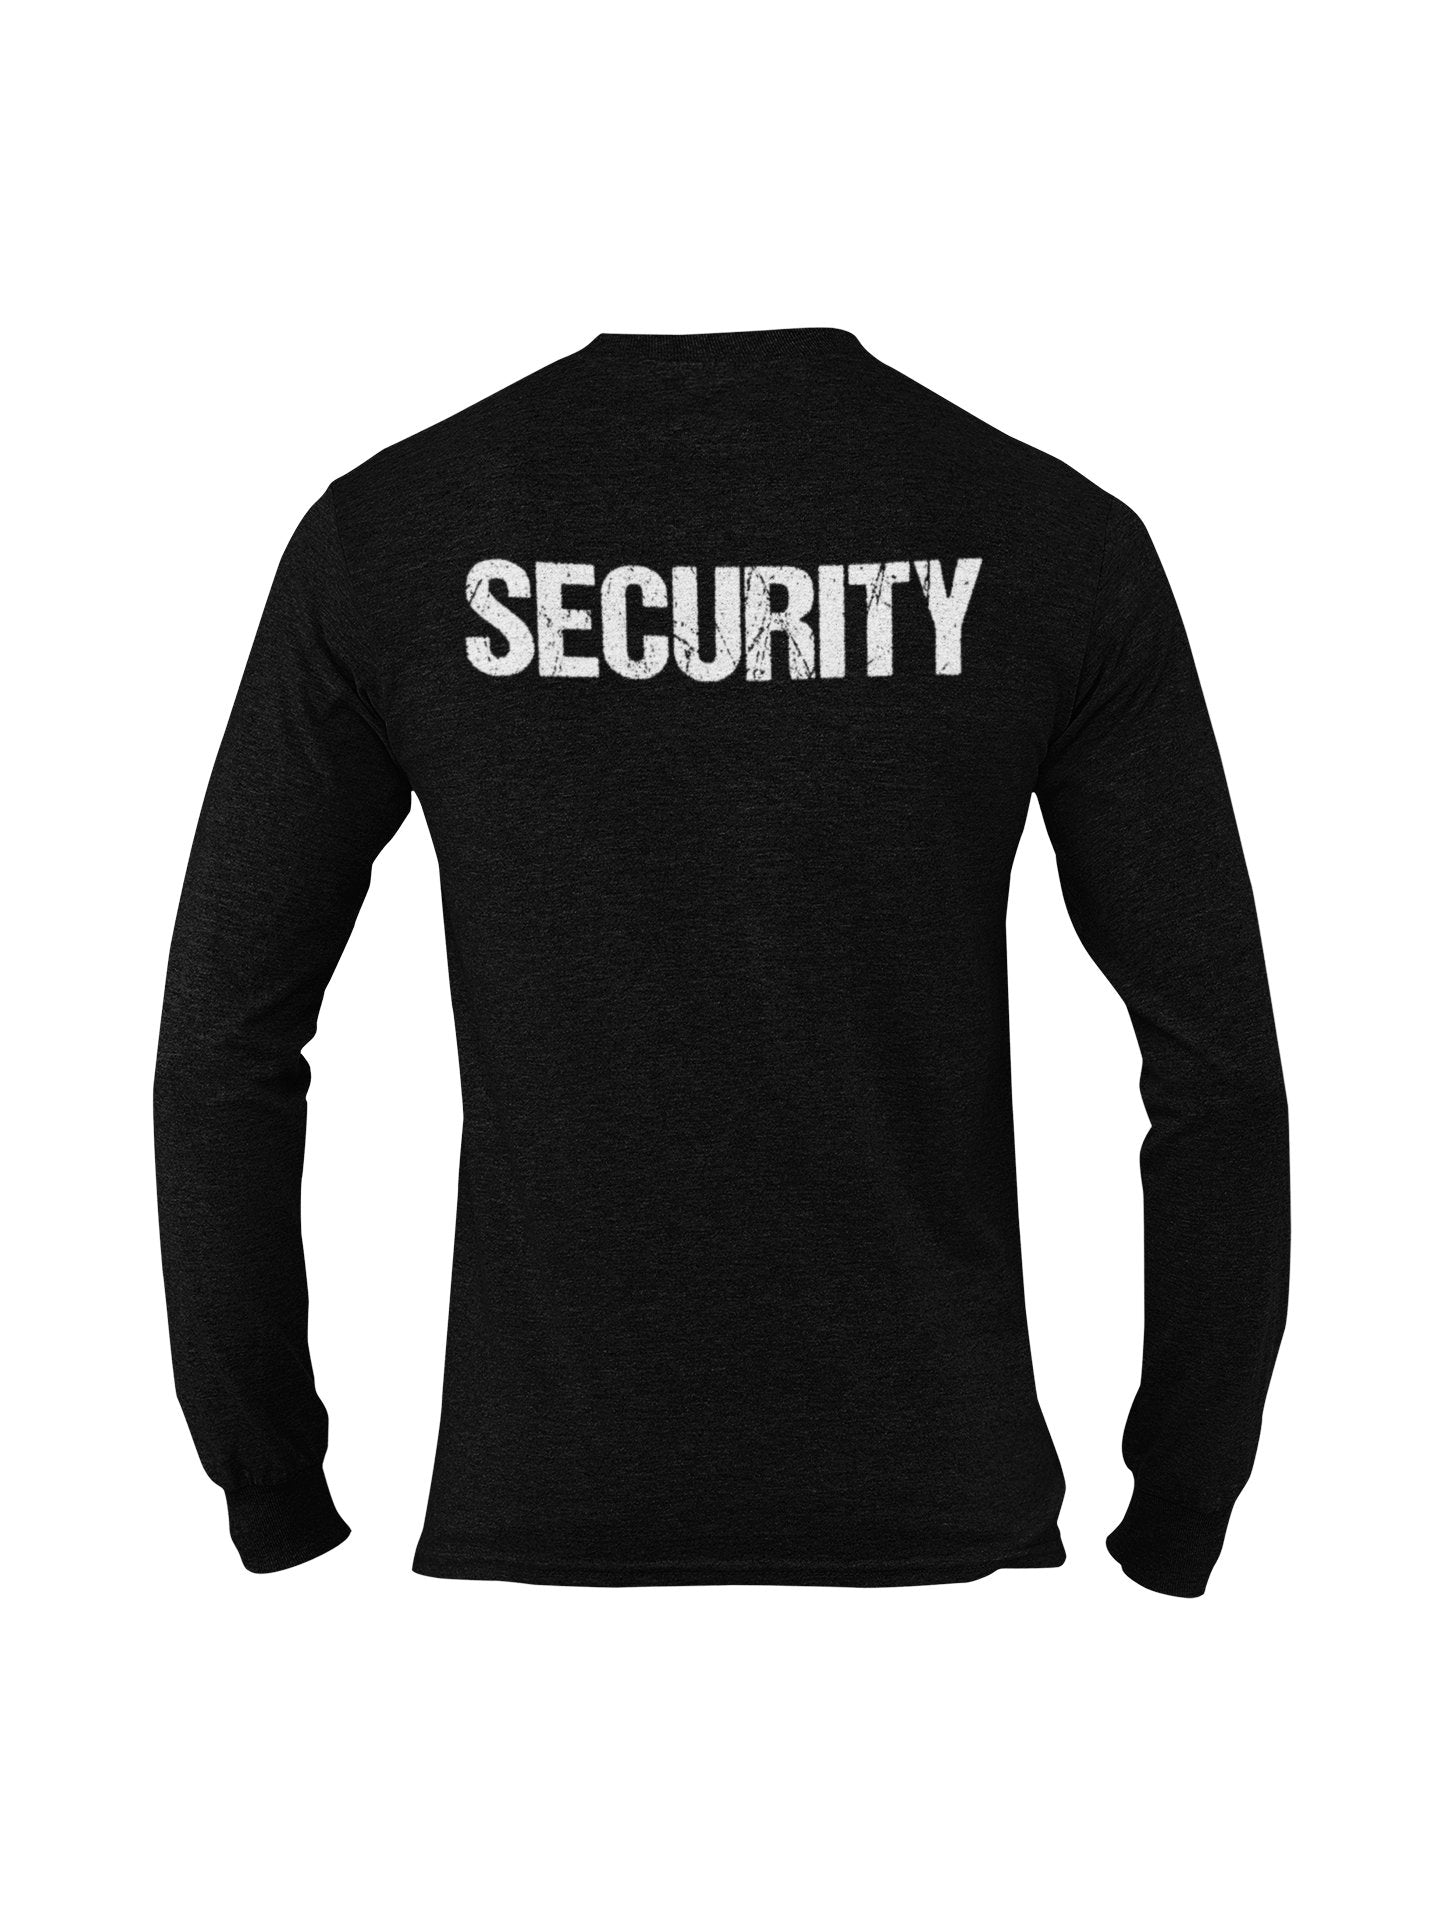 Men's Security Long Sleeve T-Shirt (Distressed Design, Black / White)